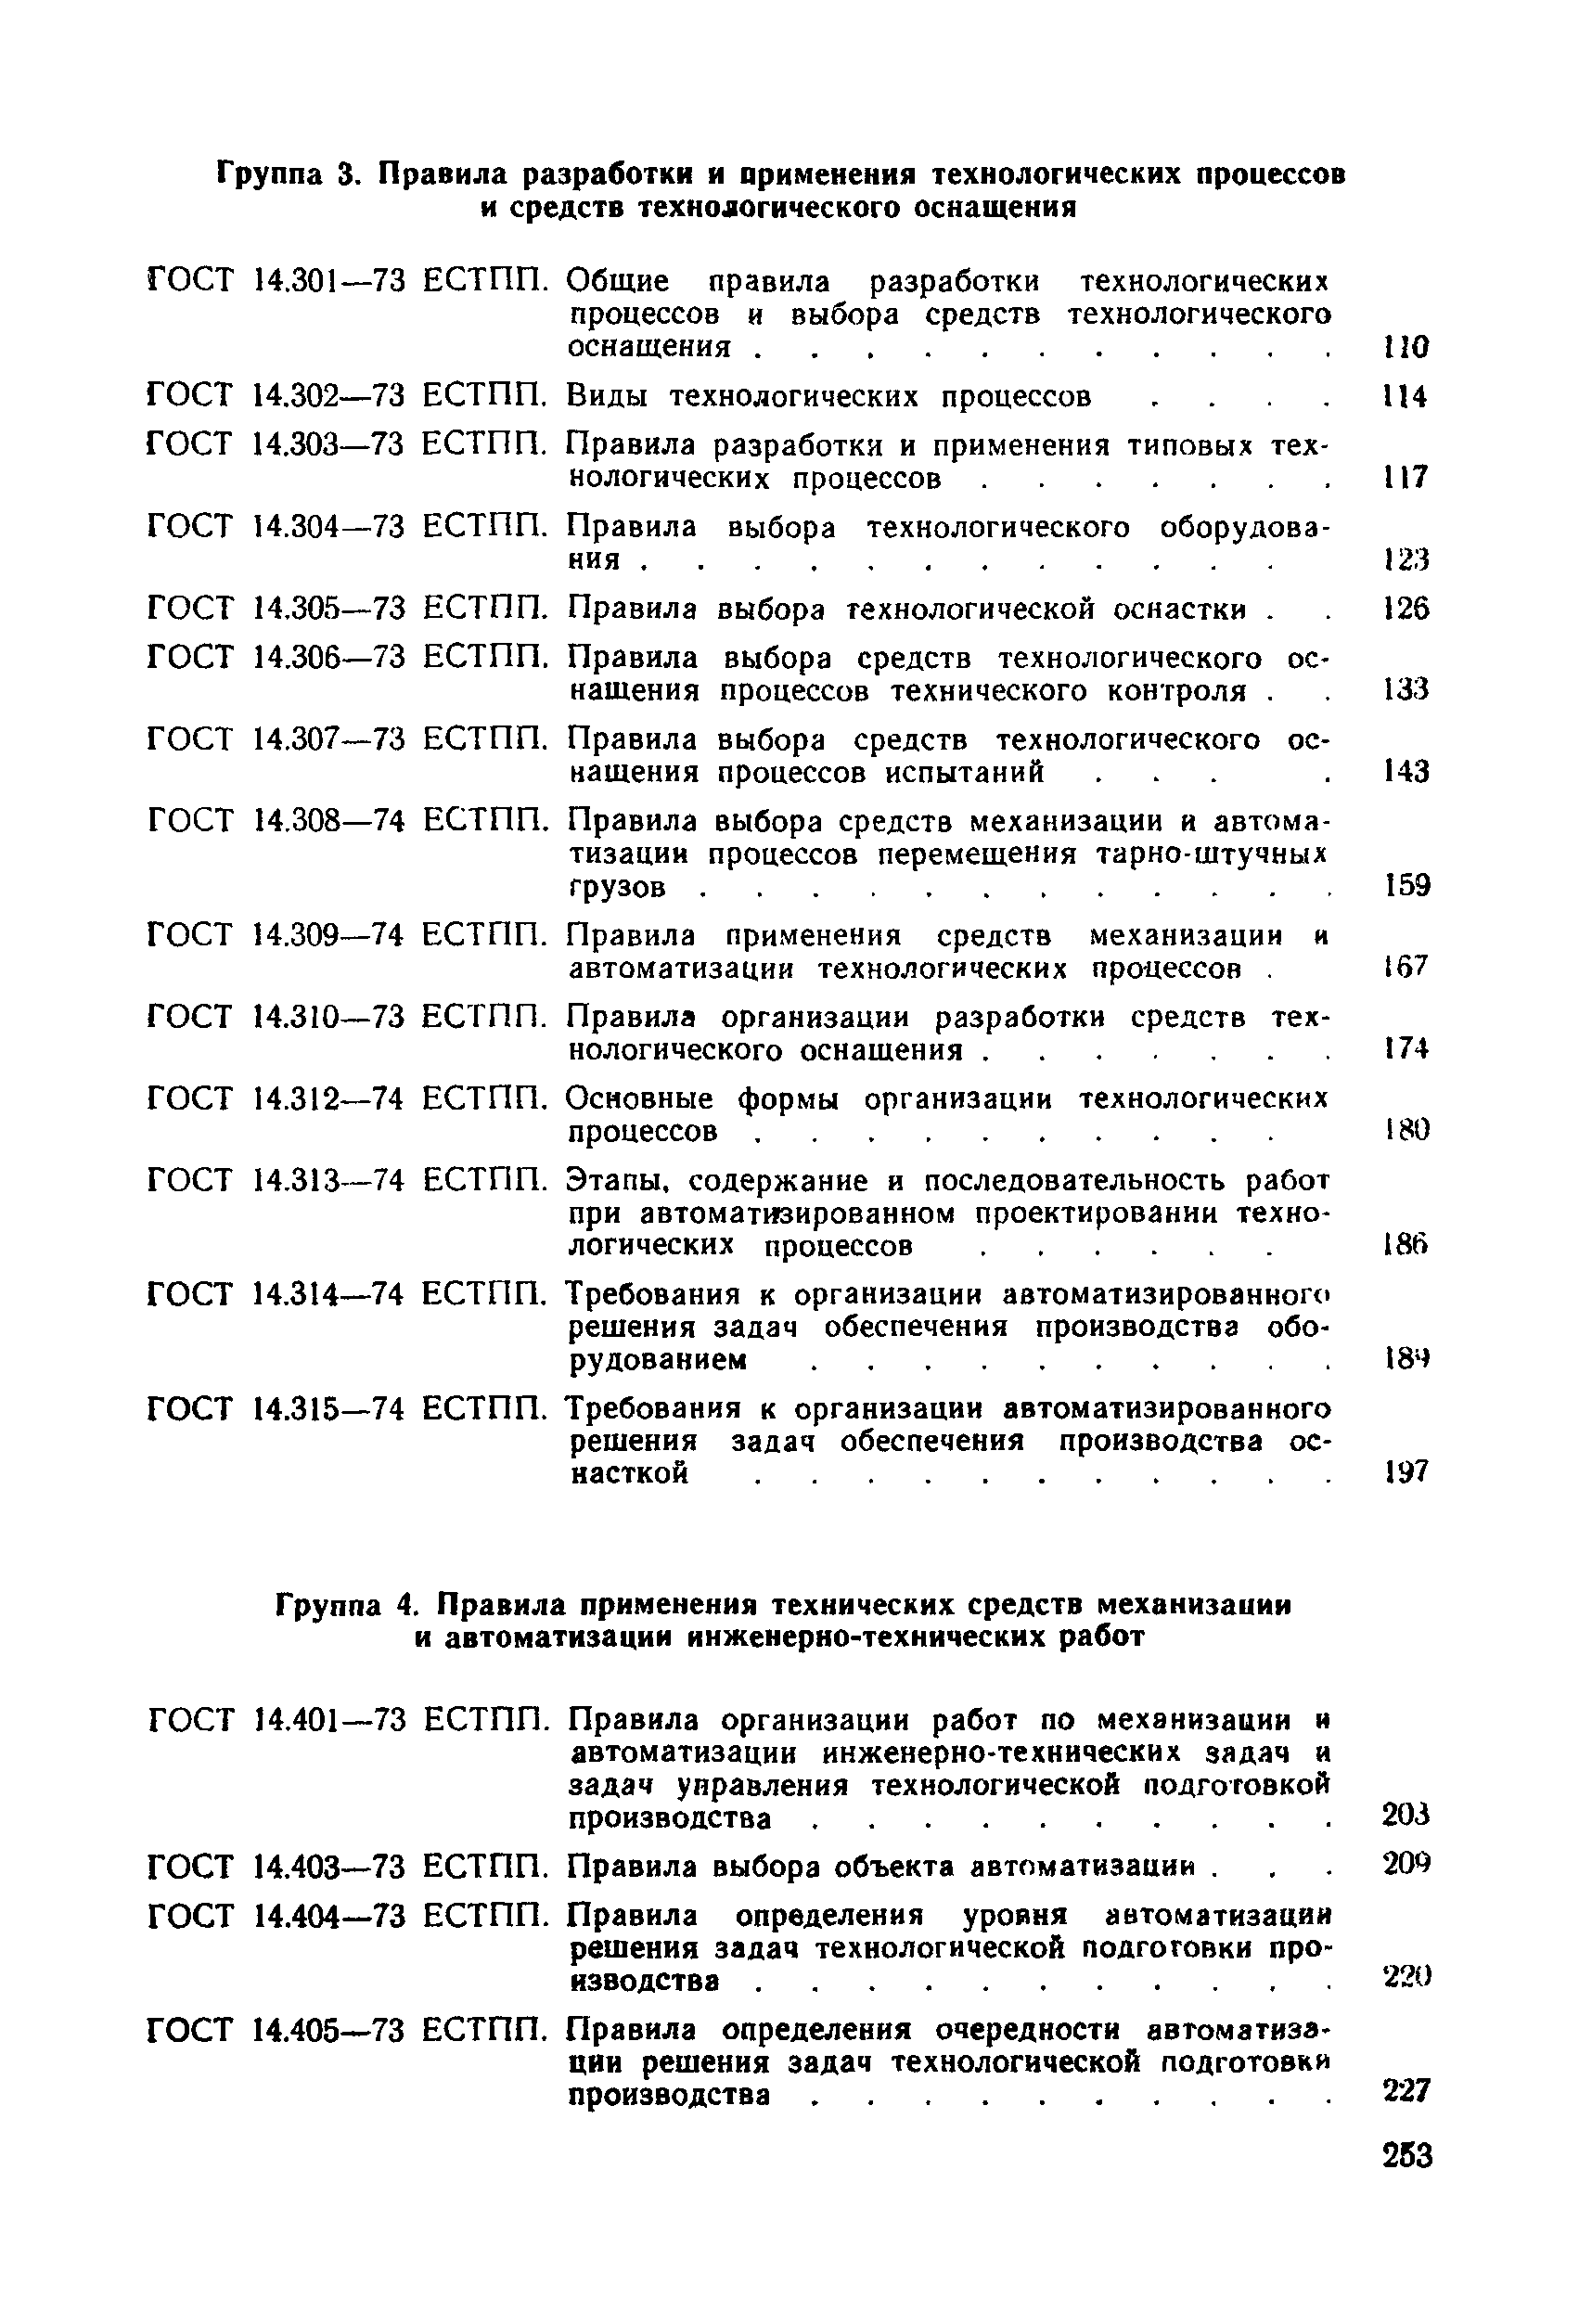 ГОСТ 14.004-74